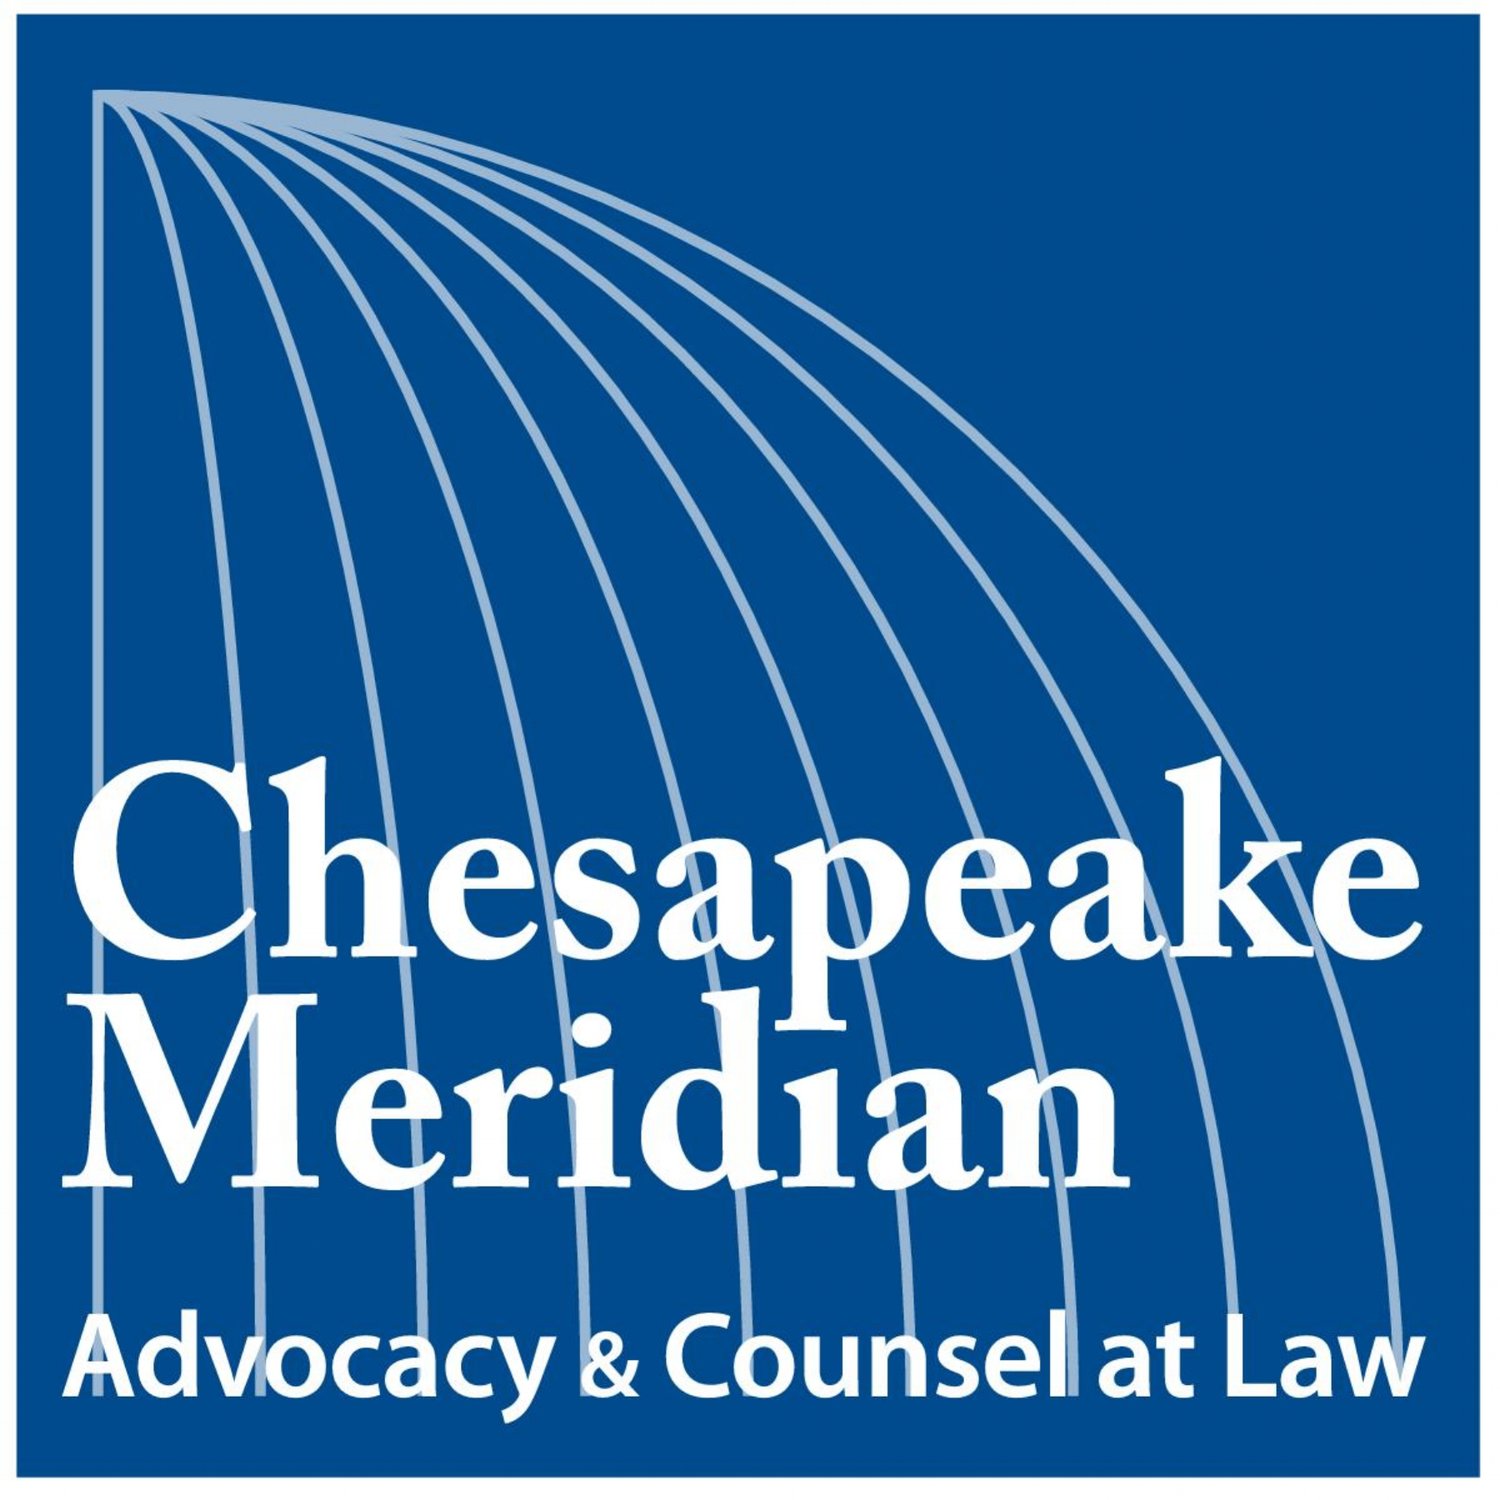 Chesapeake Meridian